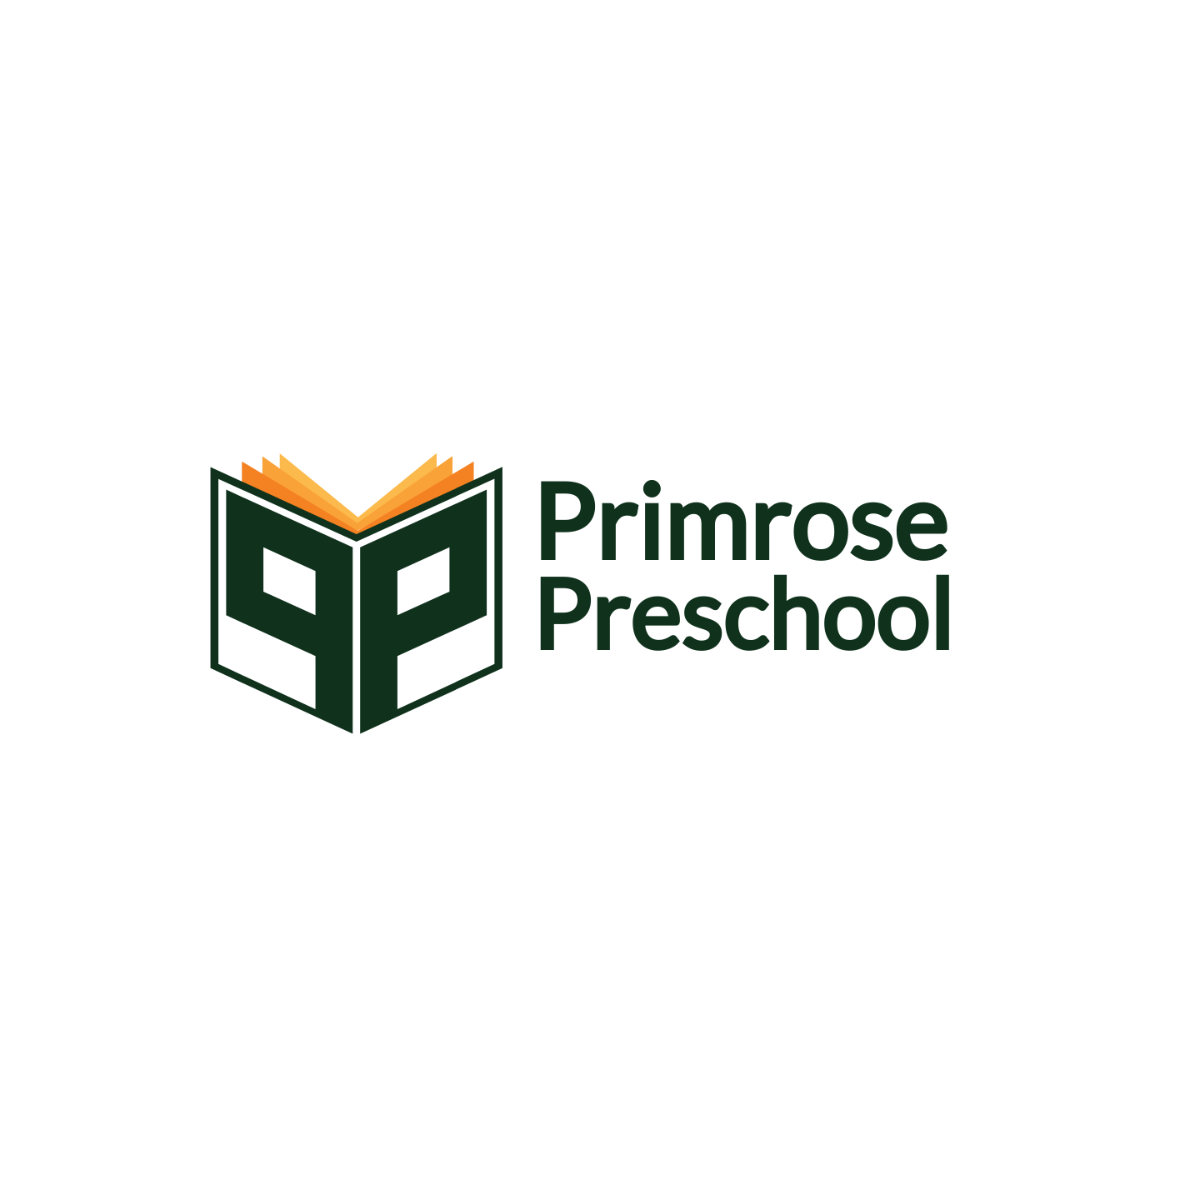 Primrose Preschool Logo Template